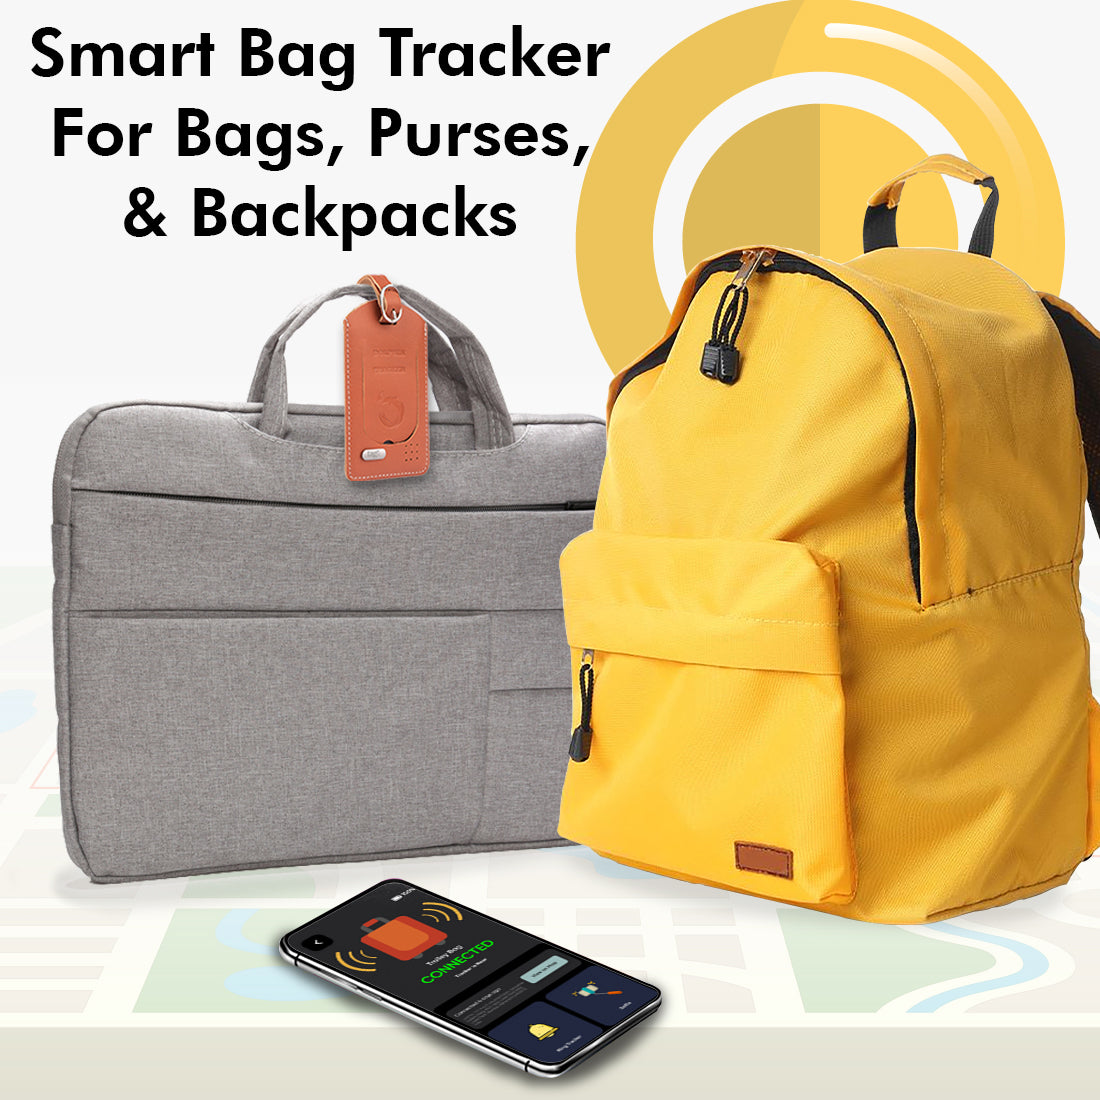 Dolphin Smart Bag Tracker